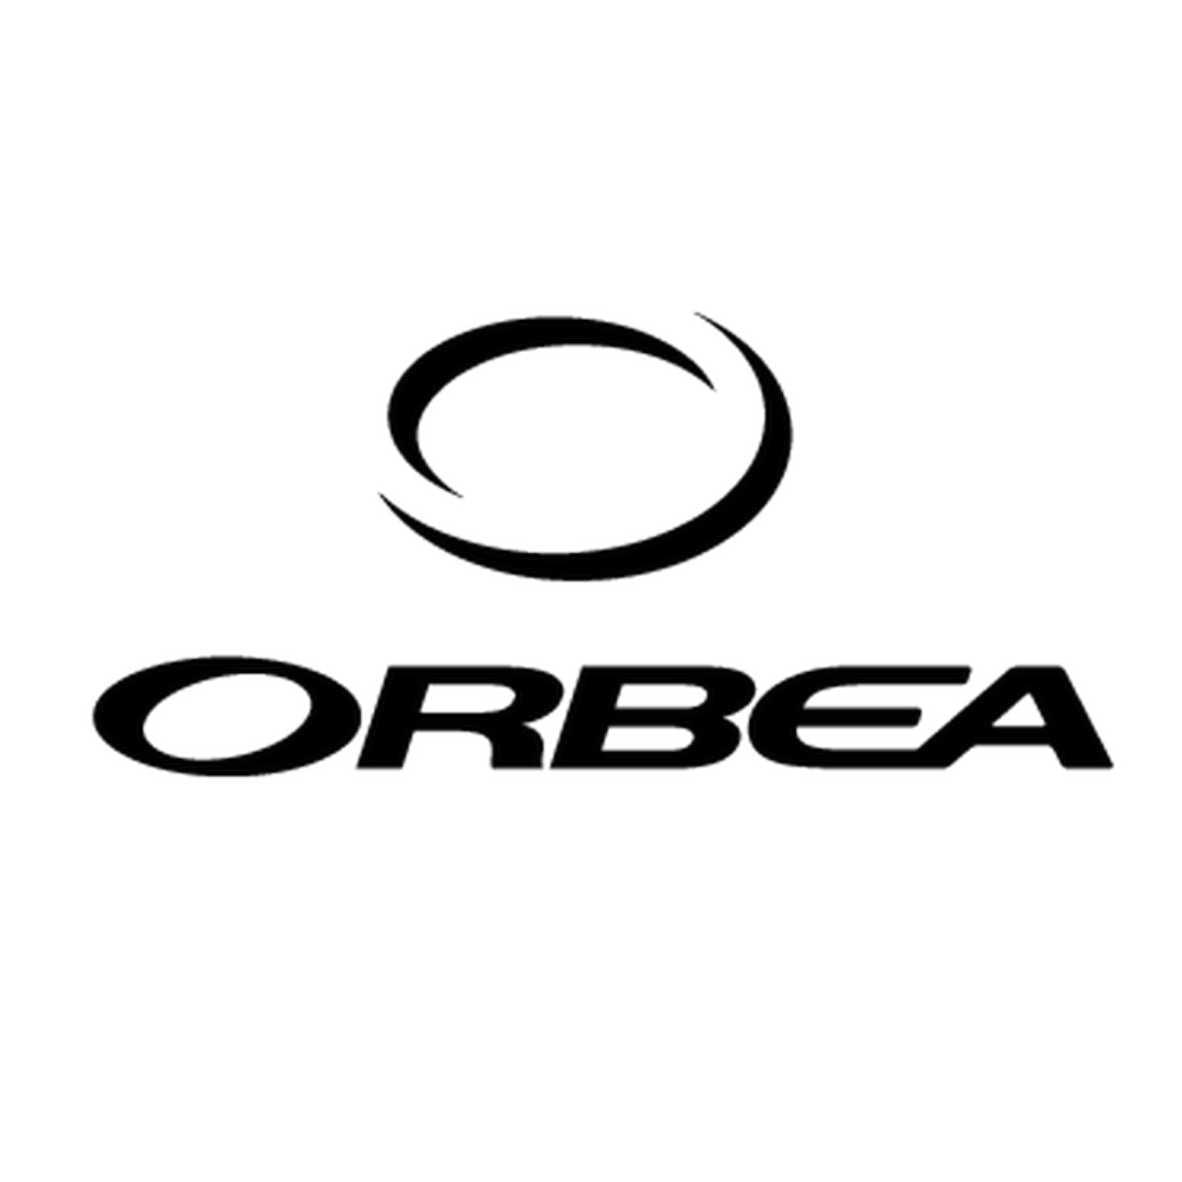 Orbea_logo